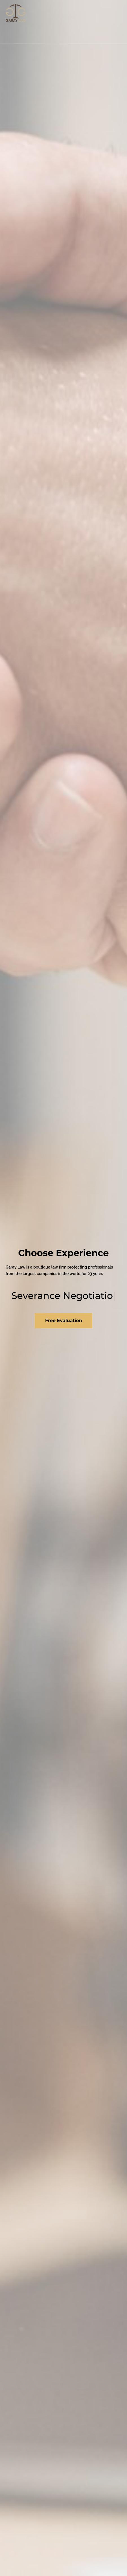 Garay Law - San Diego CA Lawyers